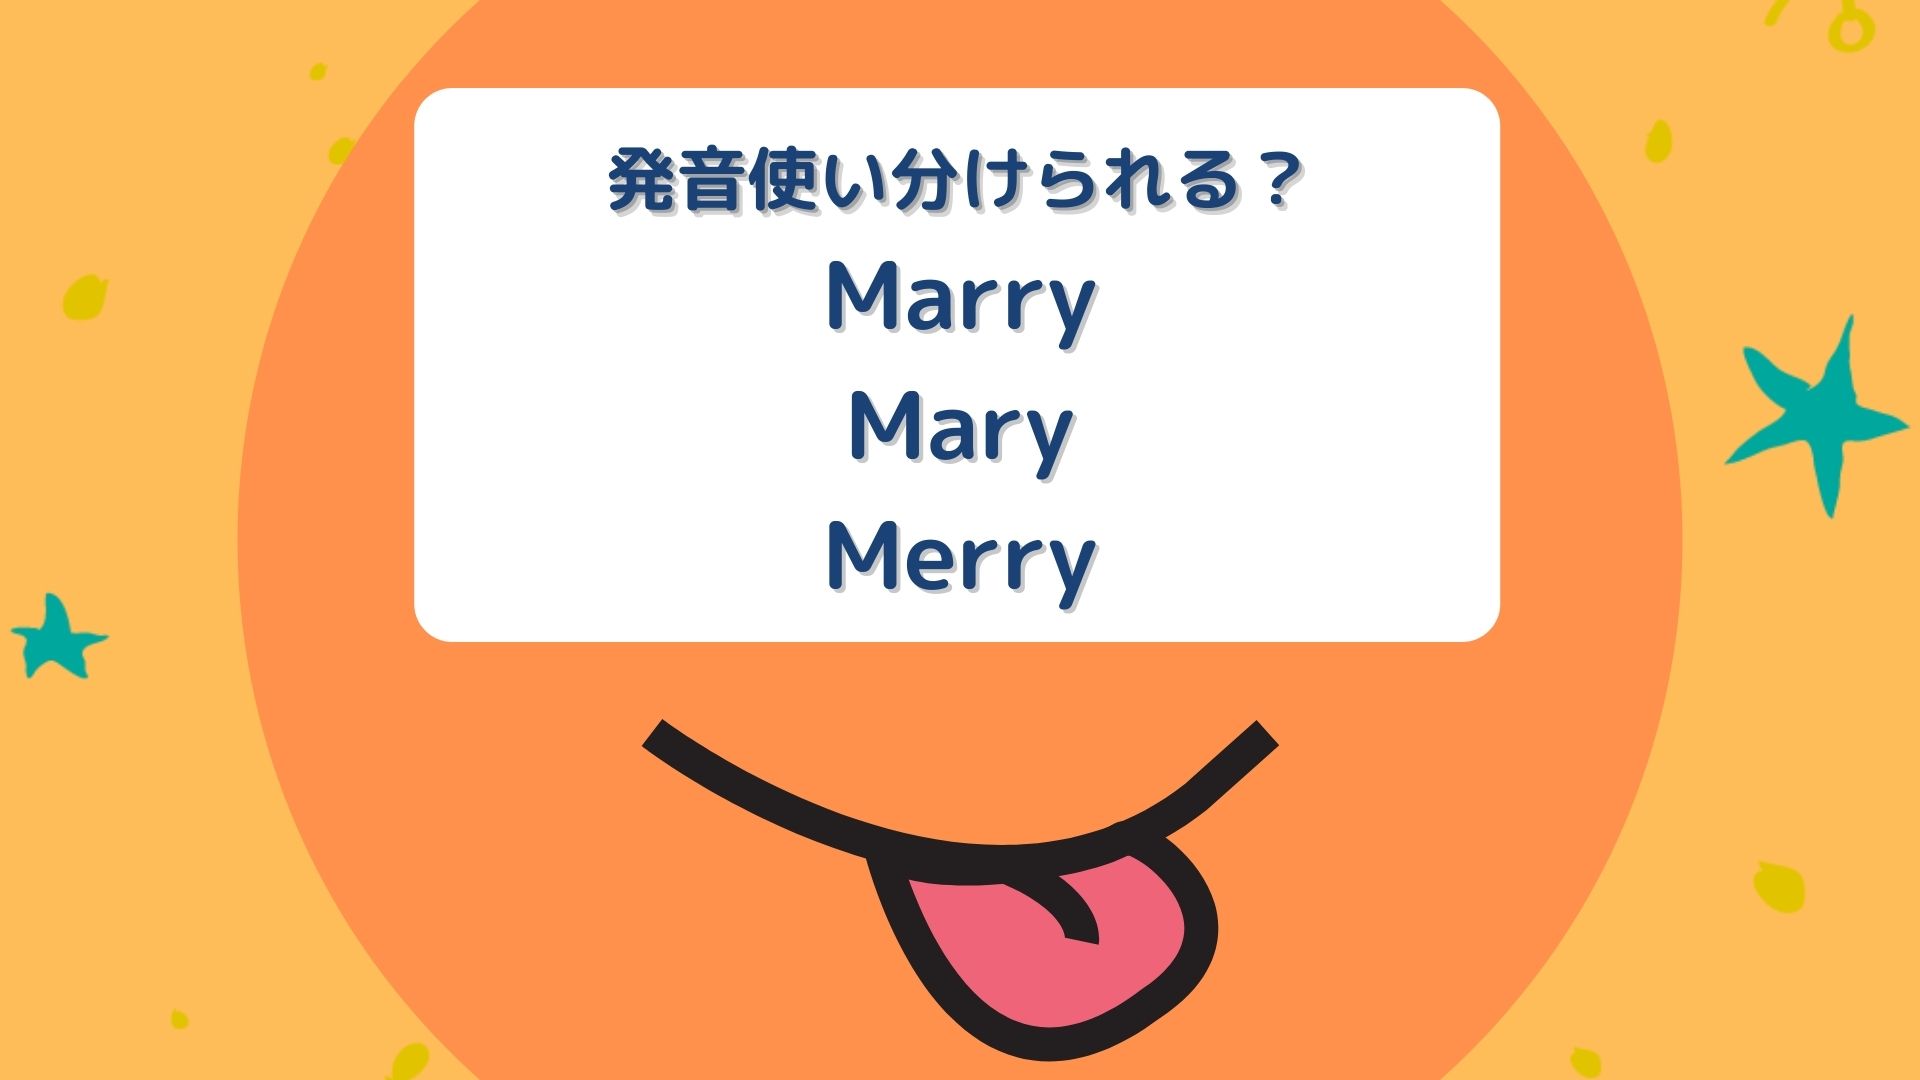 marry, mary, merryの発音の違いは？実は全く同じ発音。メリー